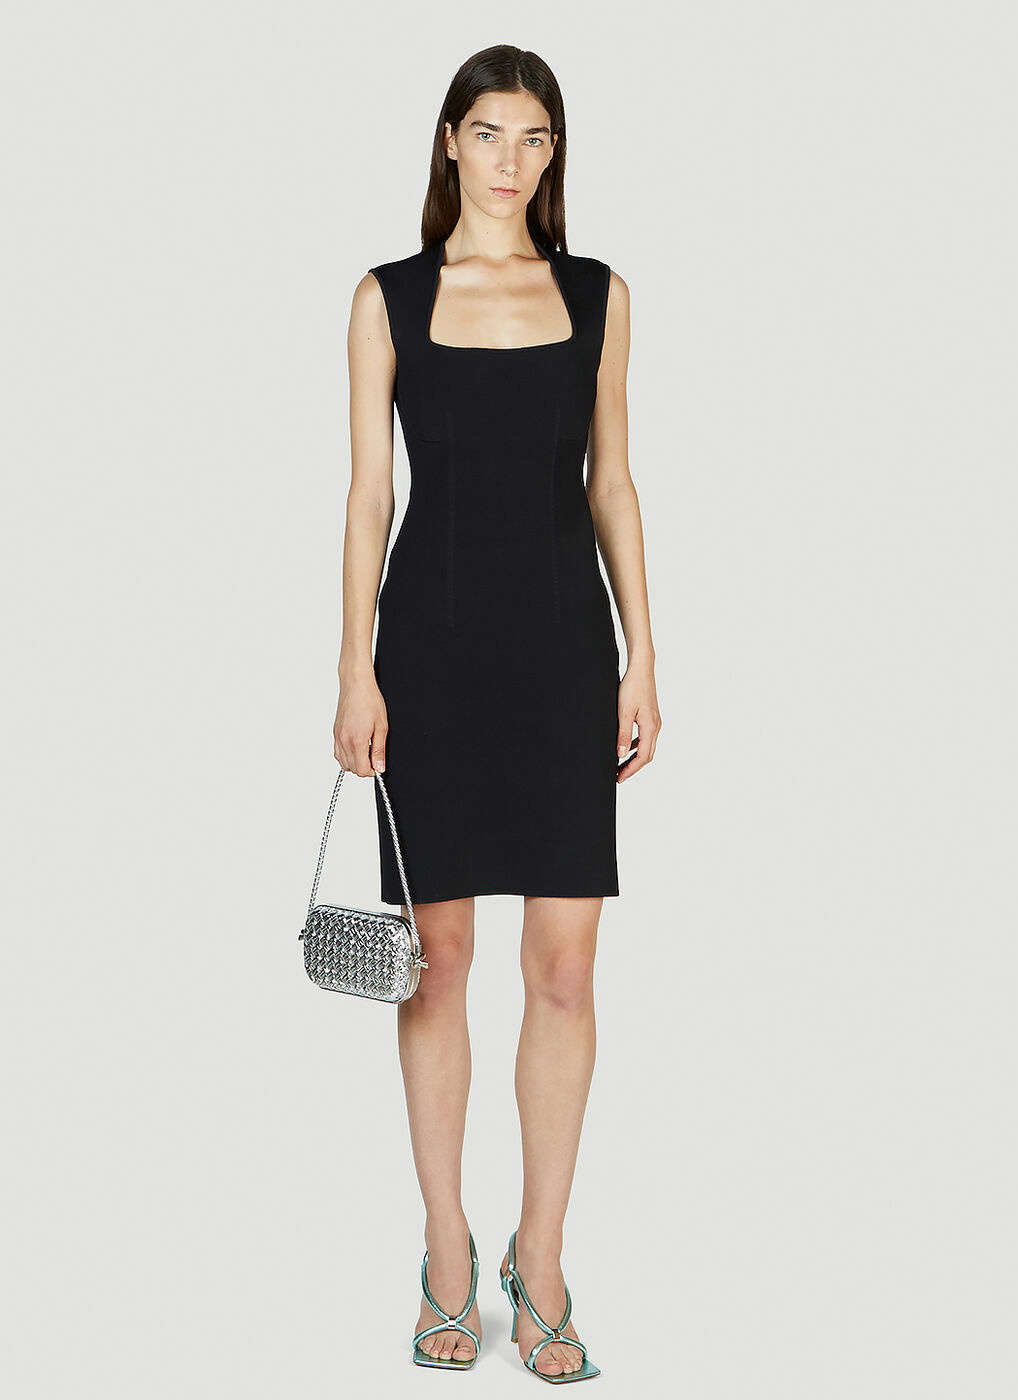 Bottega Veneta - Compact Dress in Black Bottega Veneta